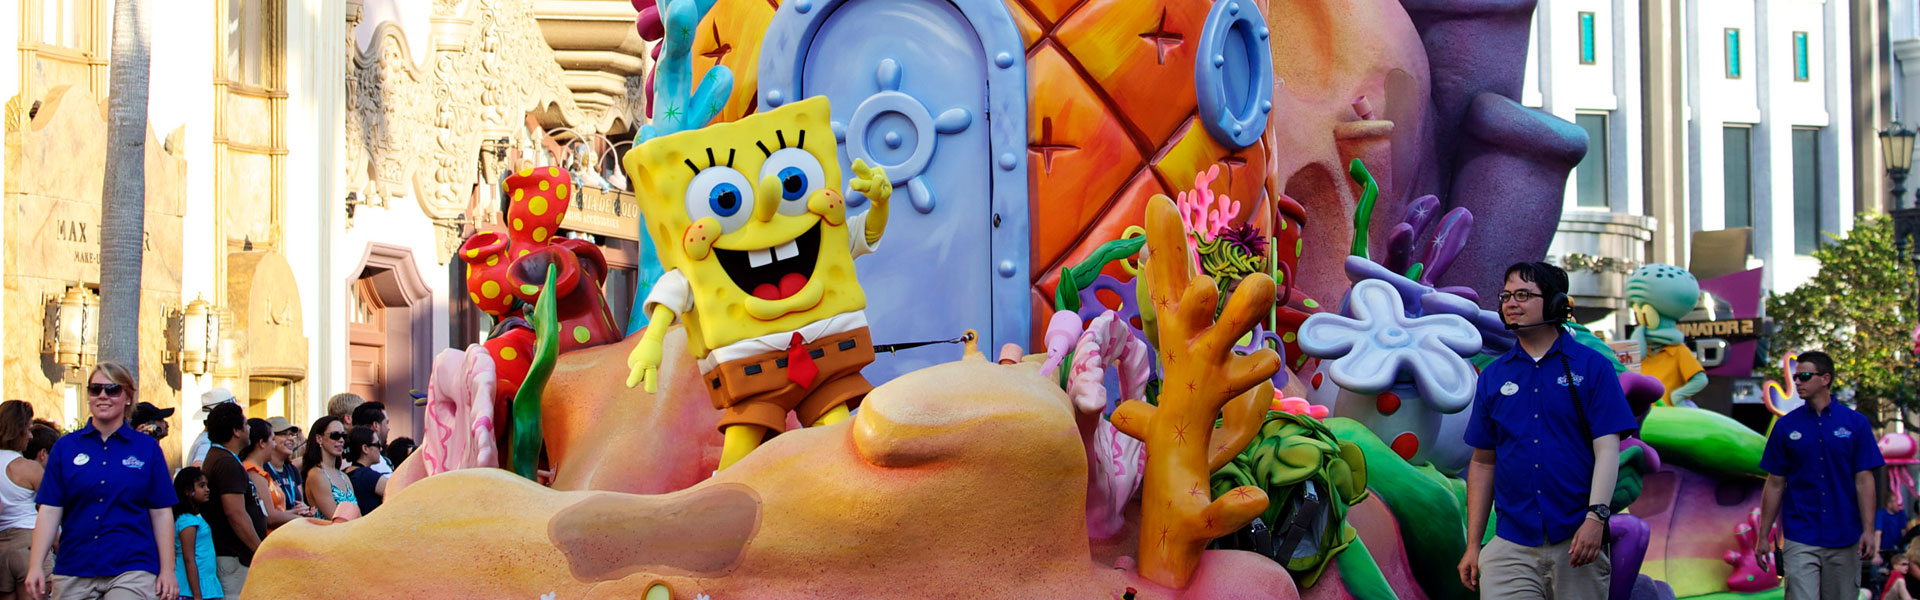 SpongeBob SquarePants on a pineapple parade float